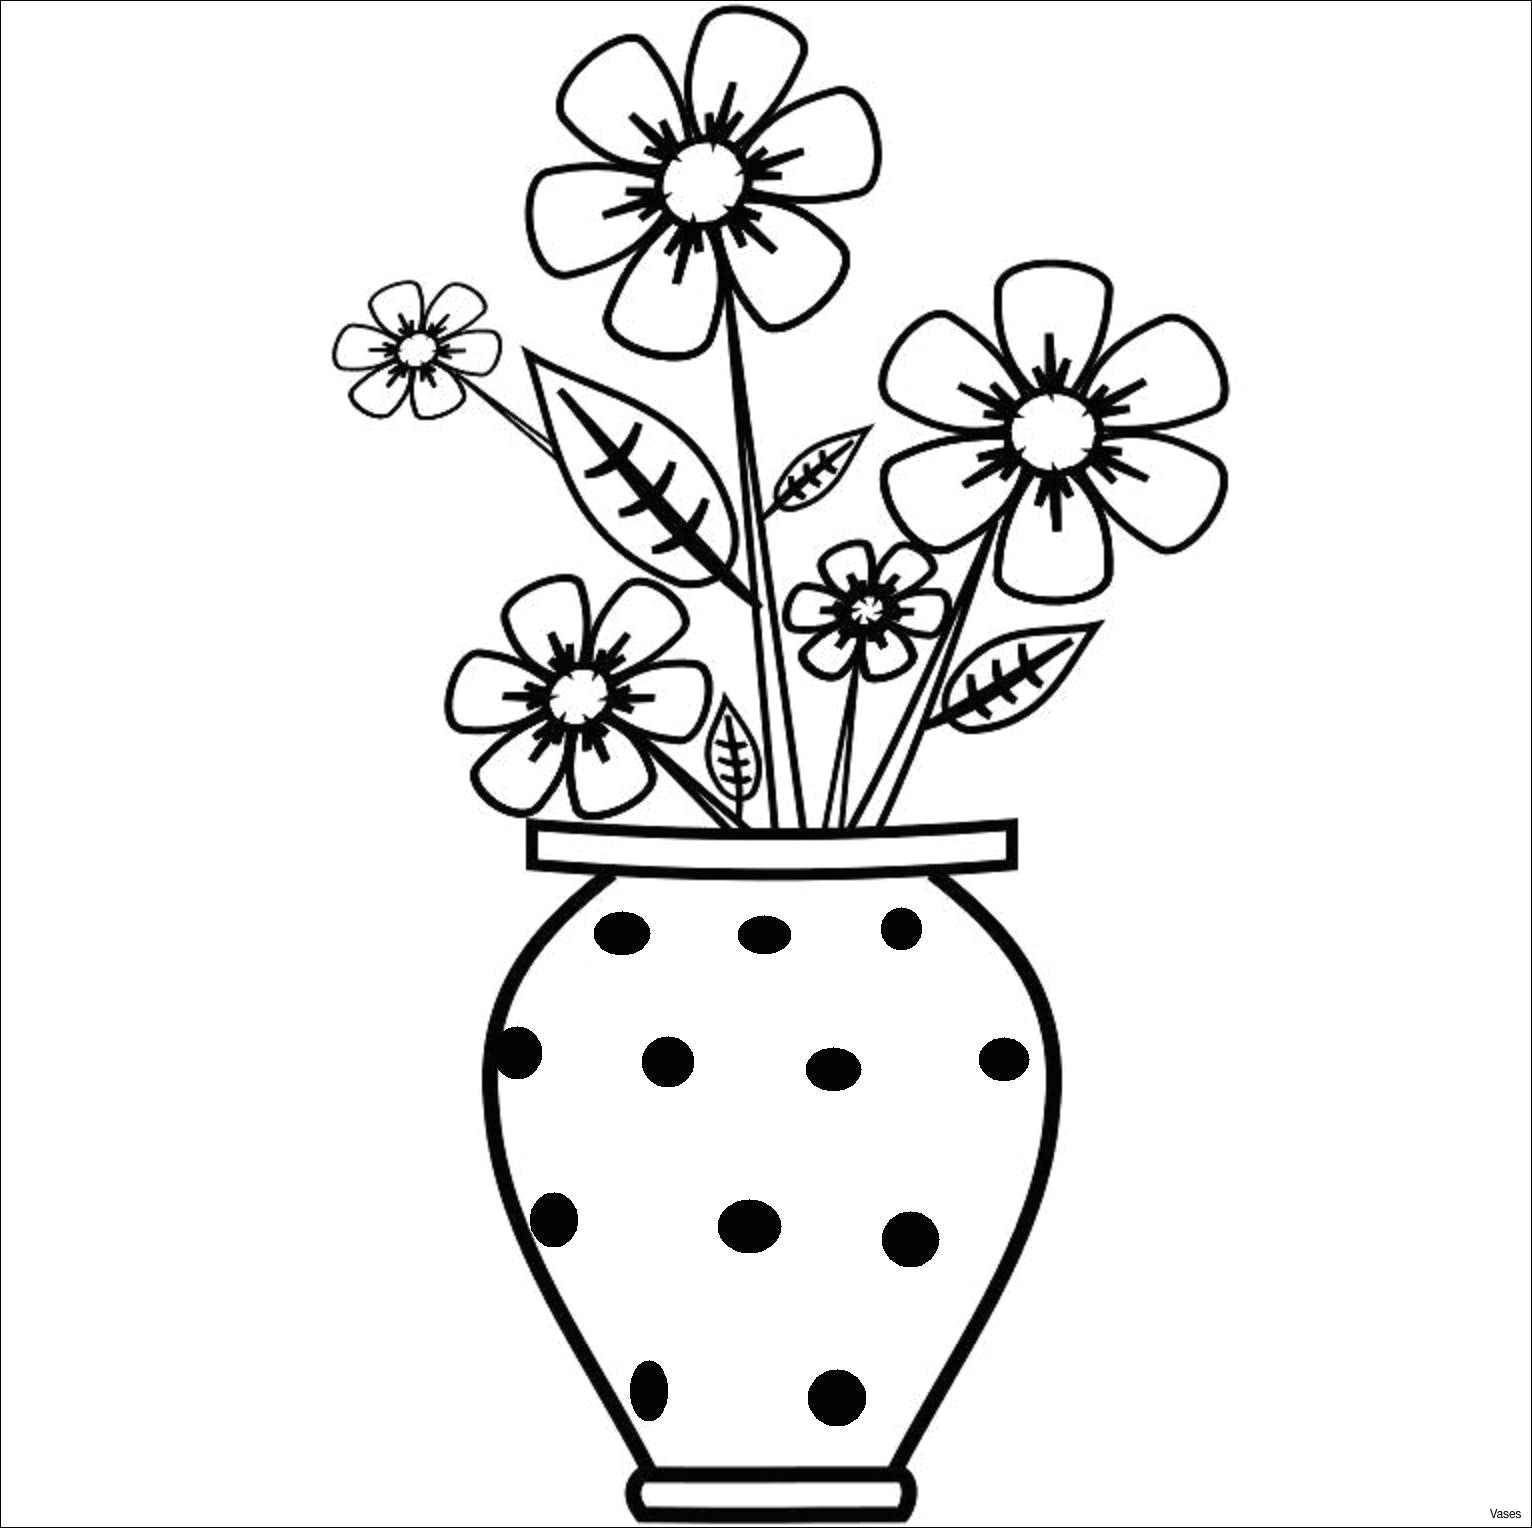 Easiest Drawings Images Of Easy Drawings Vase Art Drawings How to Draw A Vase Step 2h